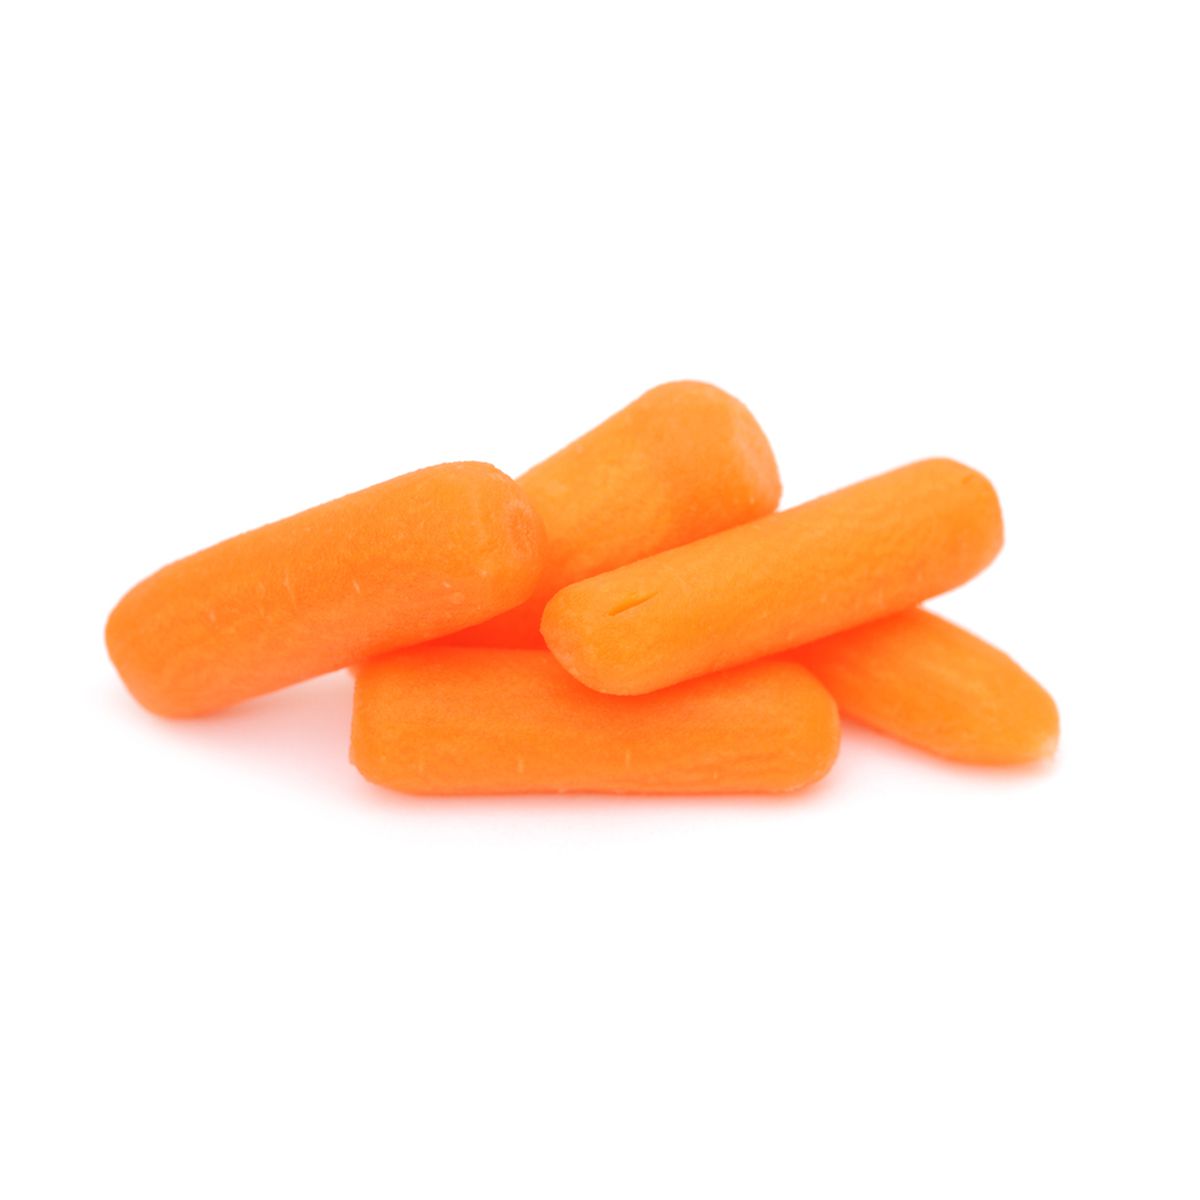 Cal-Organic Farms Organic Peeled Baby Carrots 1 LB